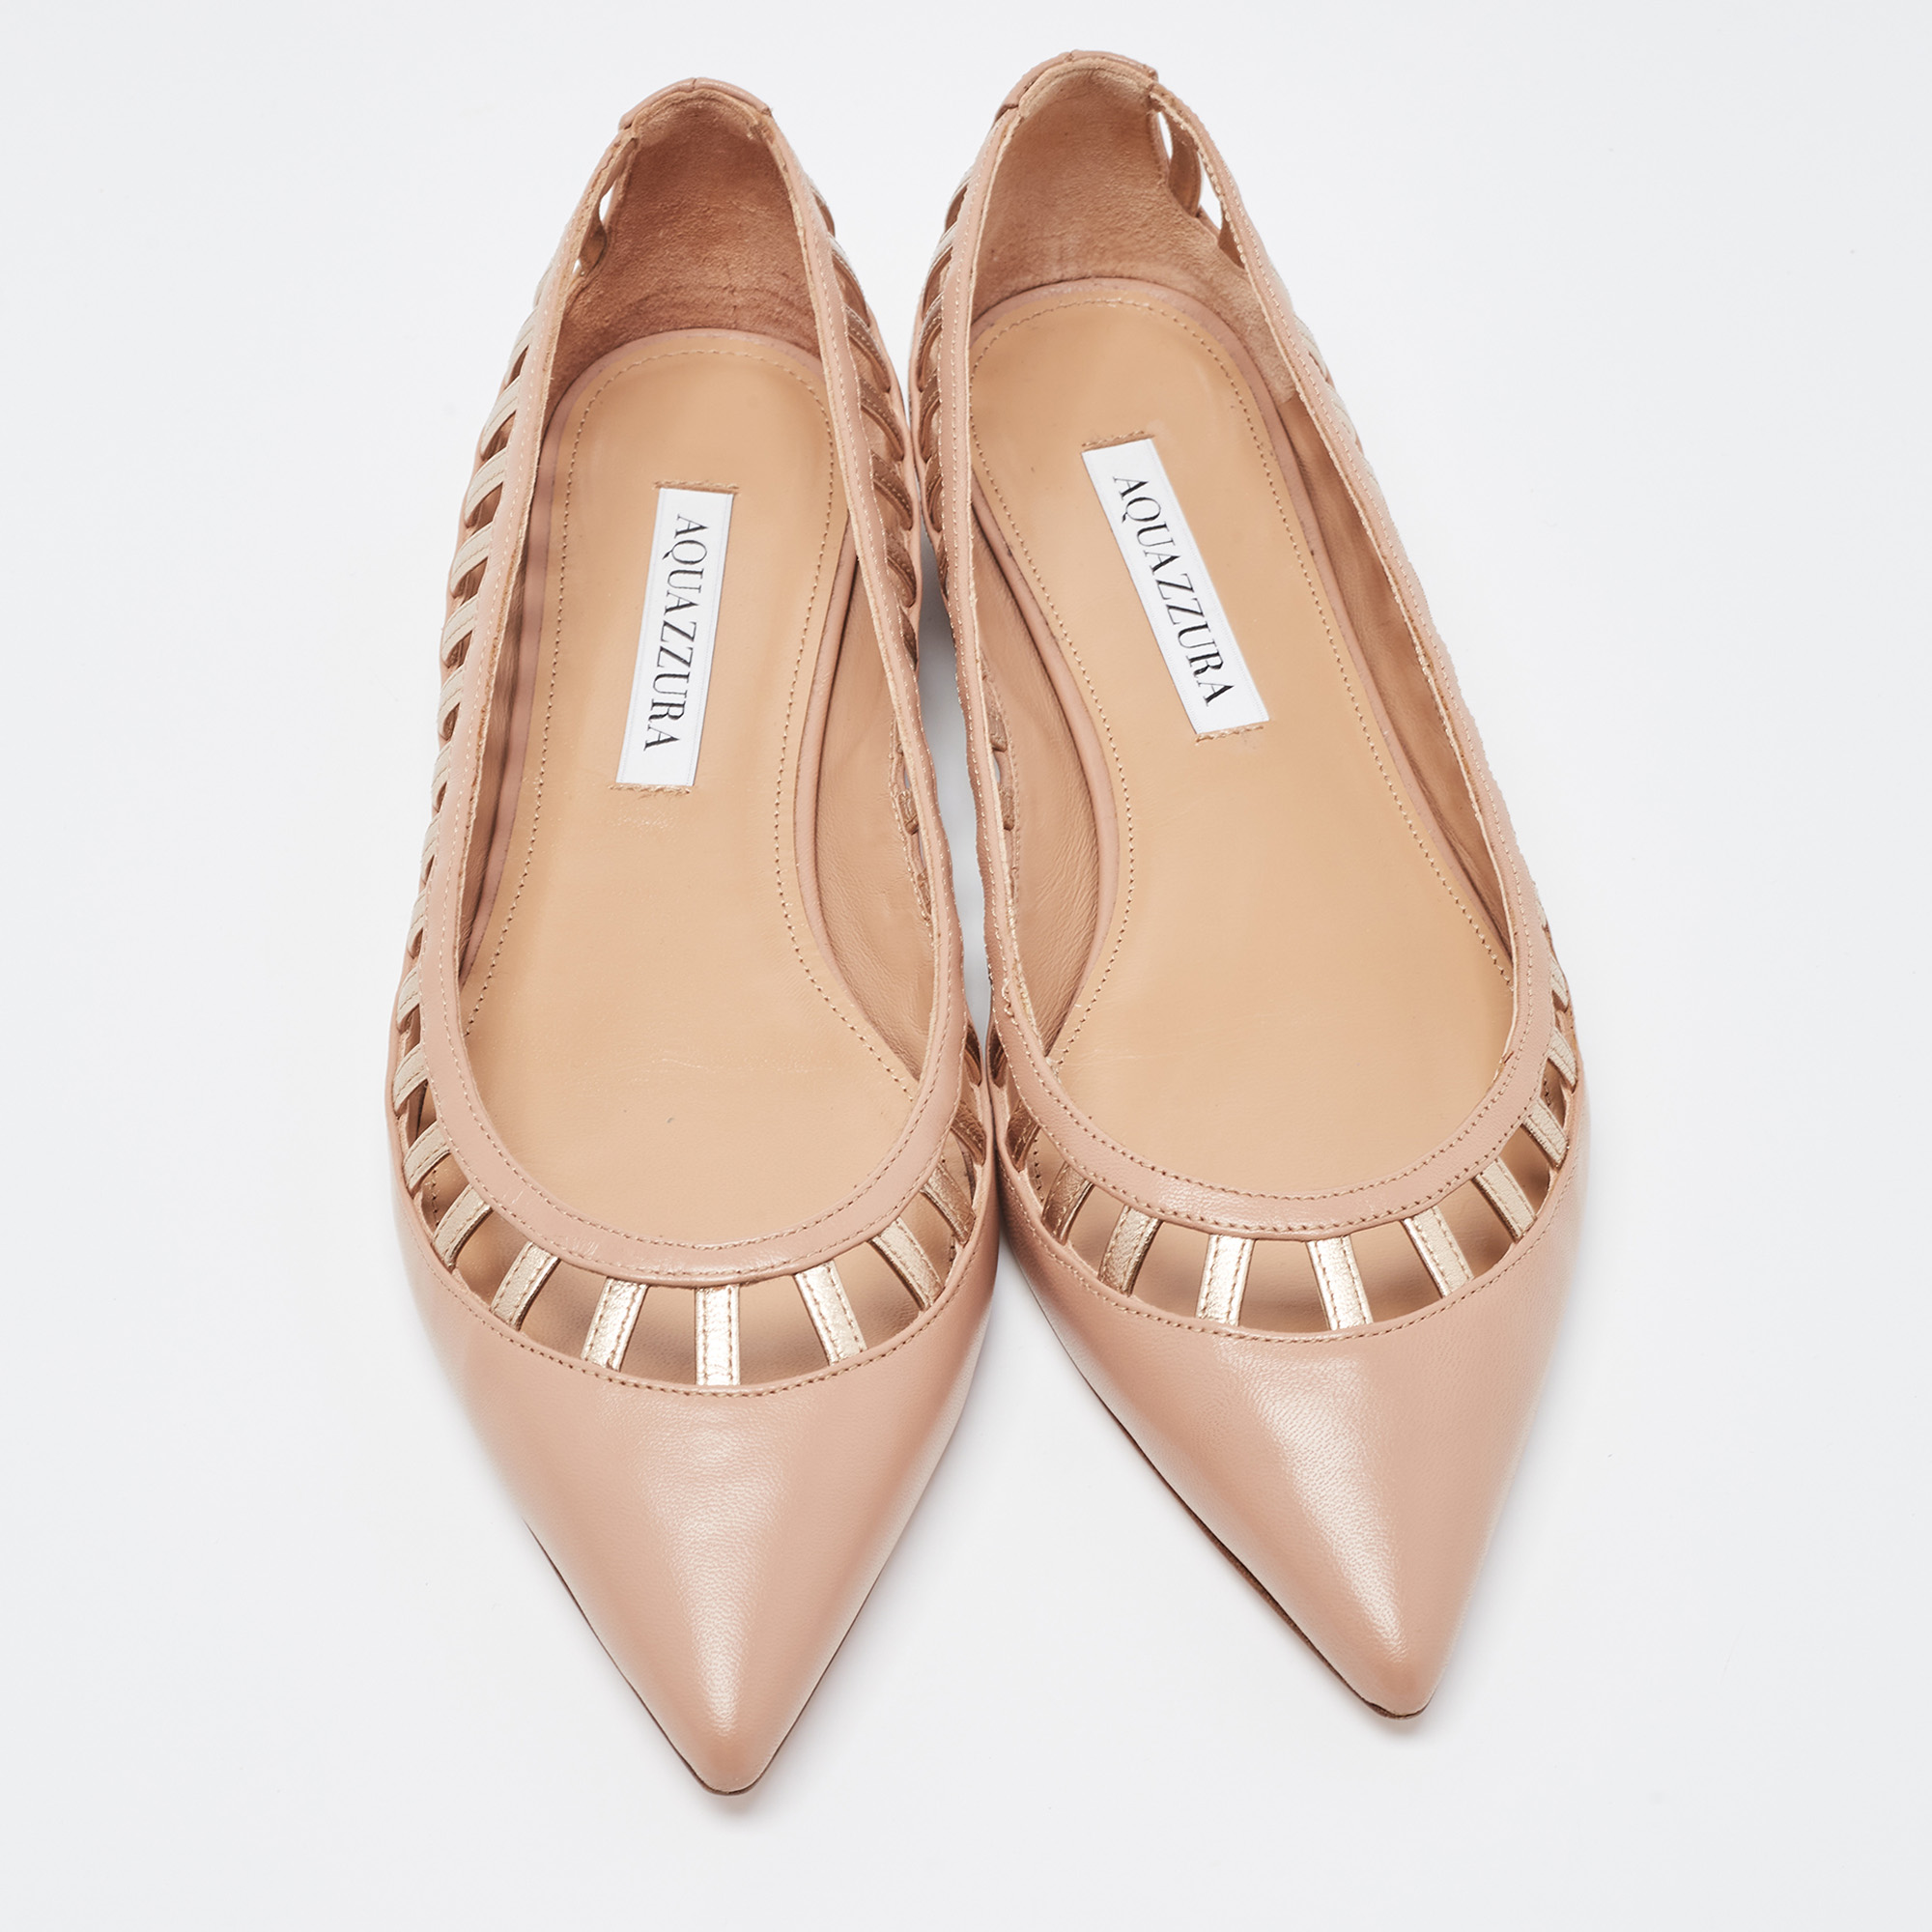 Aquazzura Beige/Gold Cutout Leather Pointed Toe Ballet Flats Size 37